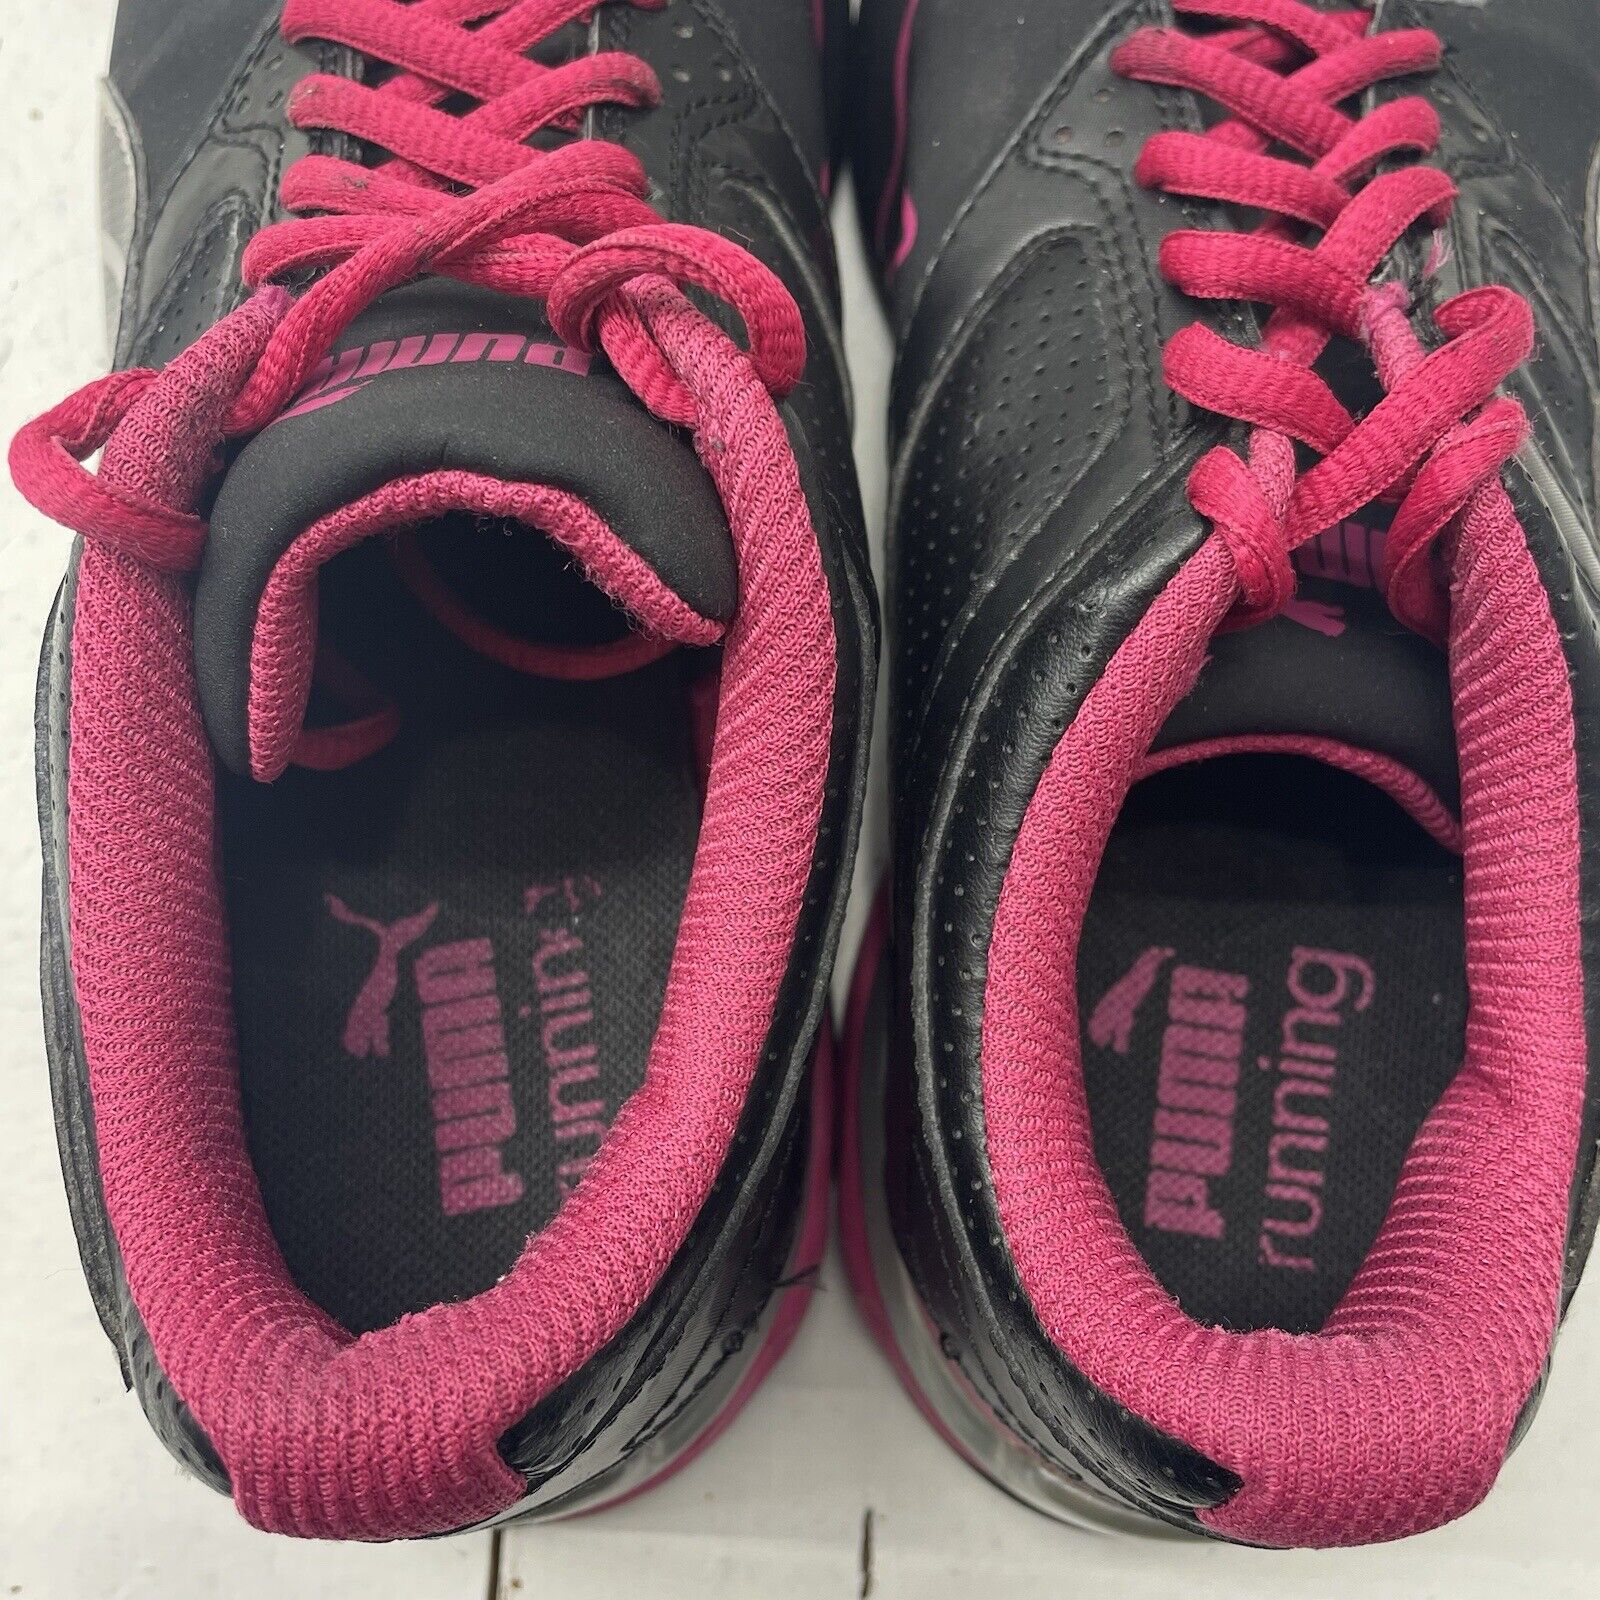 Tazon beyond Black - Women Sneakers 6 05 exchange Shoes Puma Athletic 186905 Silver Pink